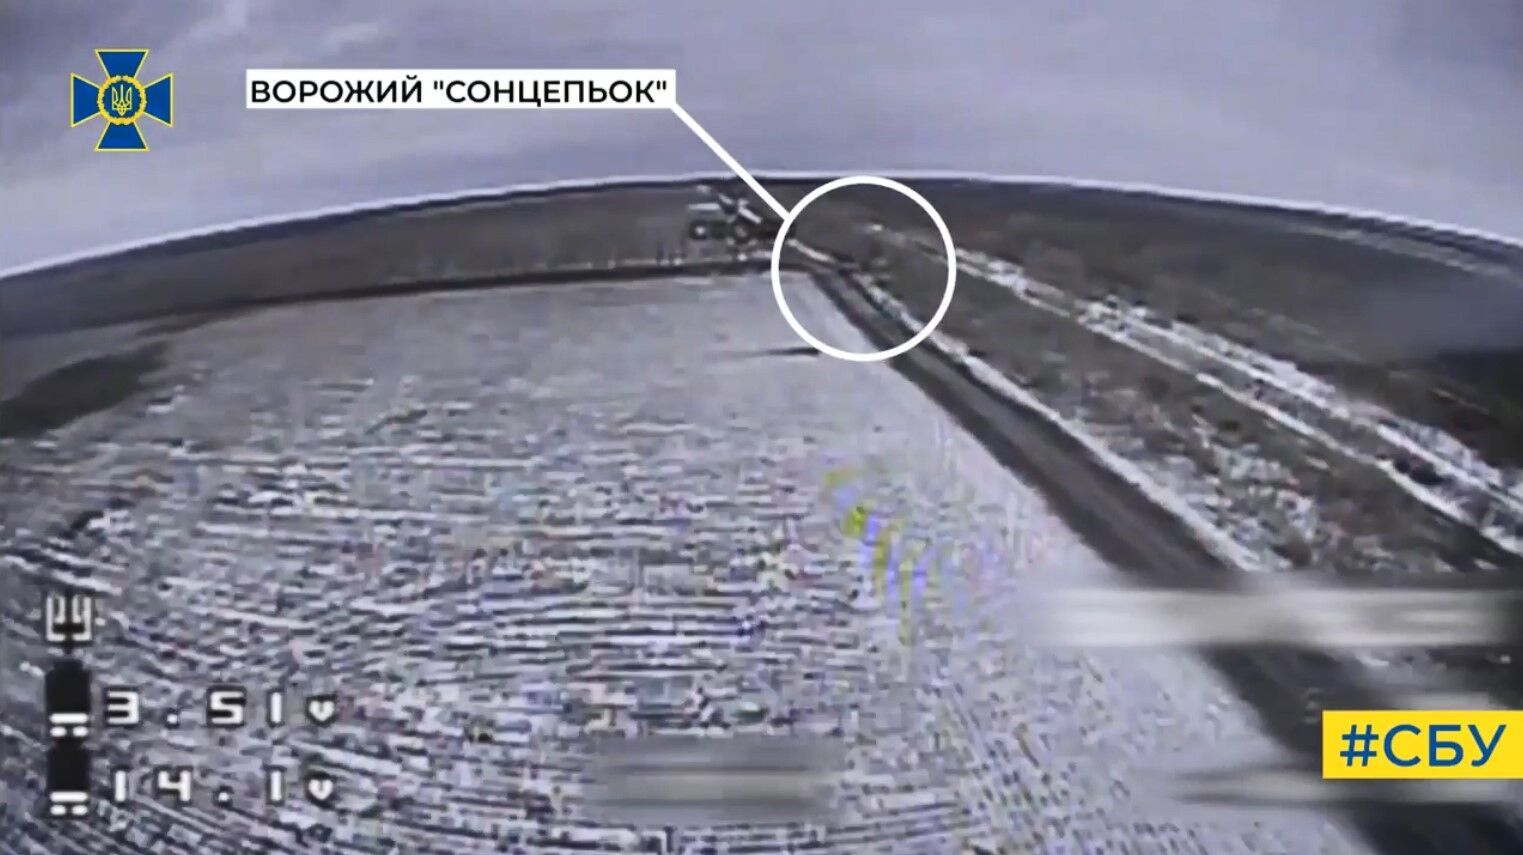 Спецназовцы попали FPV-дроном в ТОС-1А ''Солнцепек'' армии рф: поймали ''на горячем'' - видео